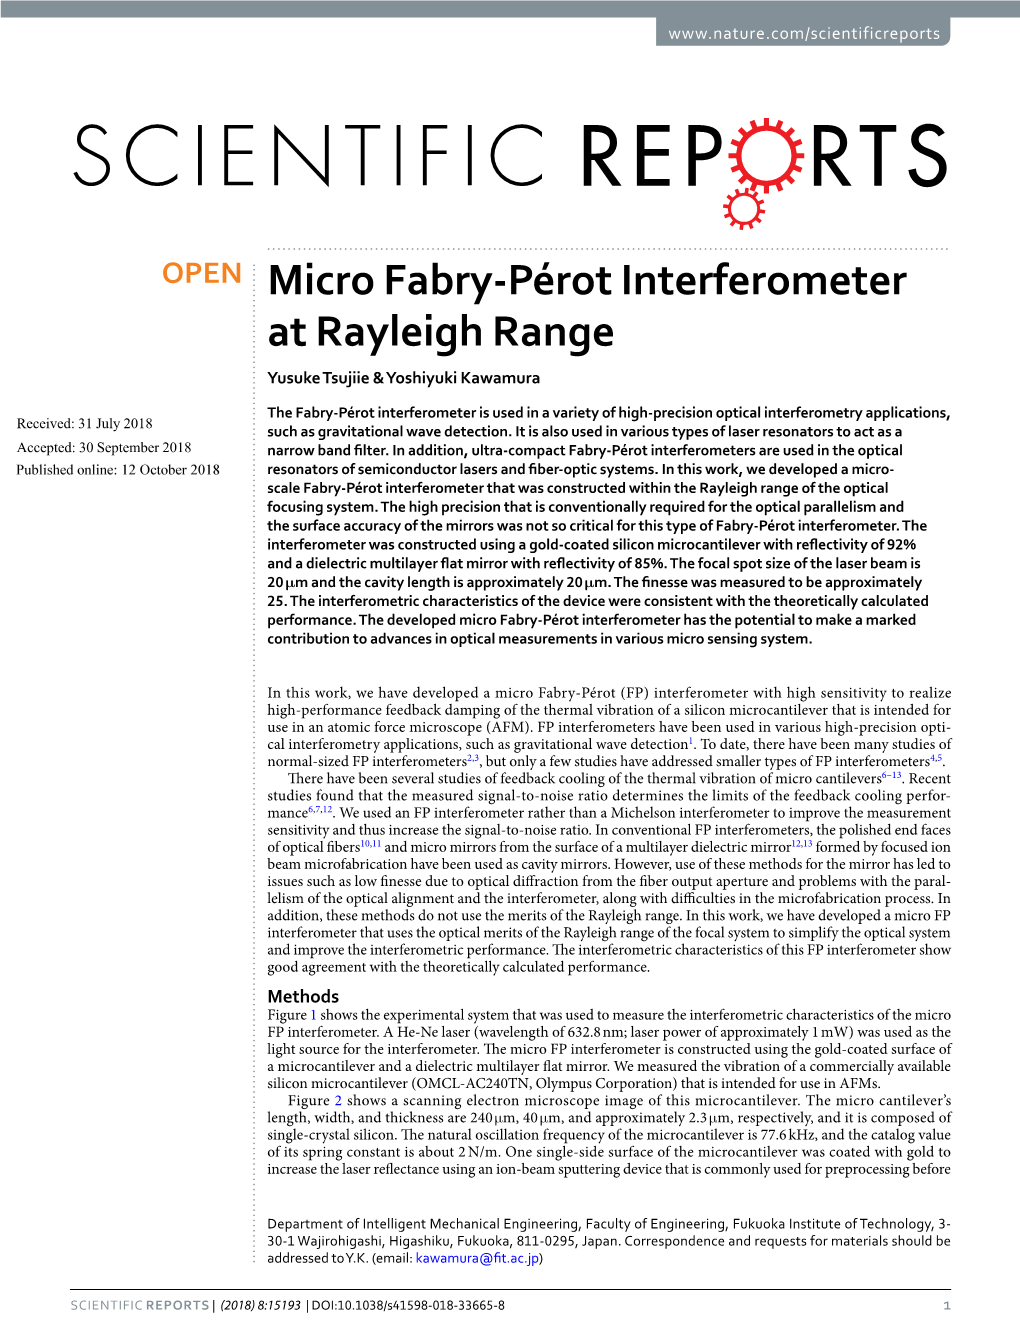 Micro Fabry-Pérot Interferometer at Rayleigh Range Yusuke Tsujiie & Yoshiyuki Kawamura